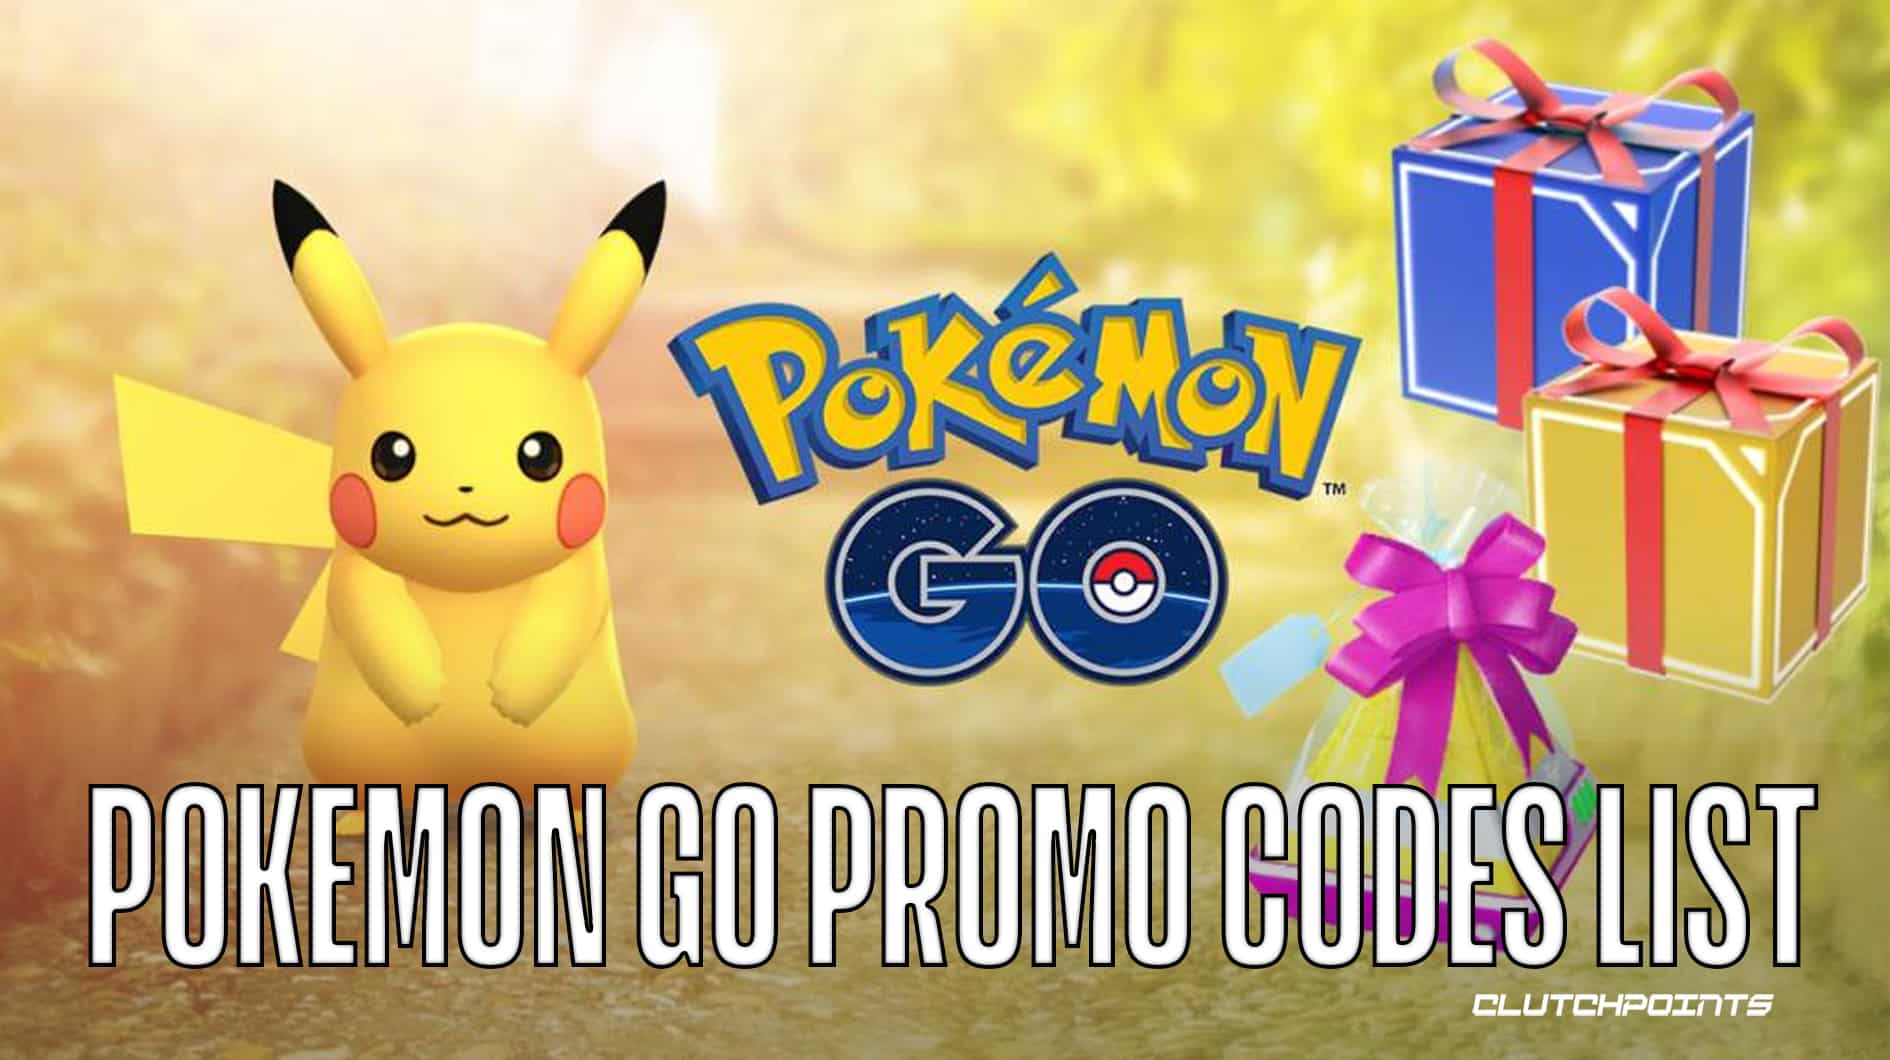 How To Get Free Pokemon Go Promo Codes Legally